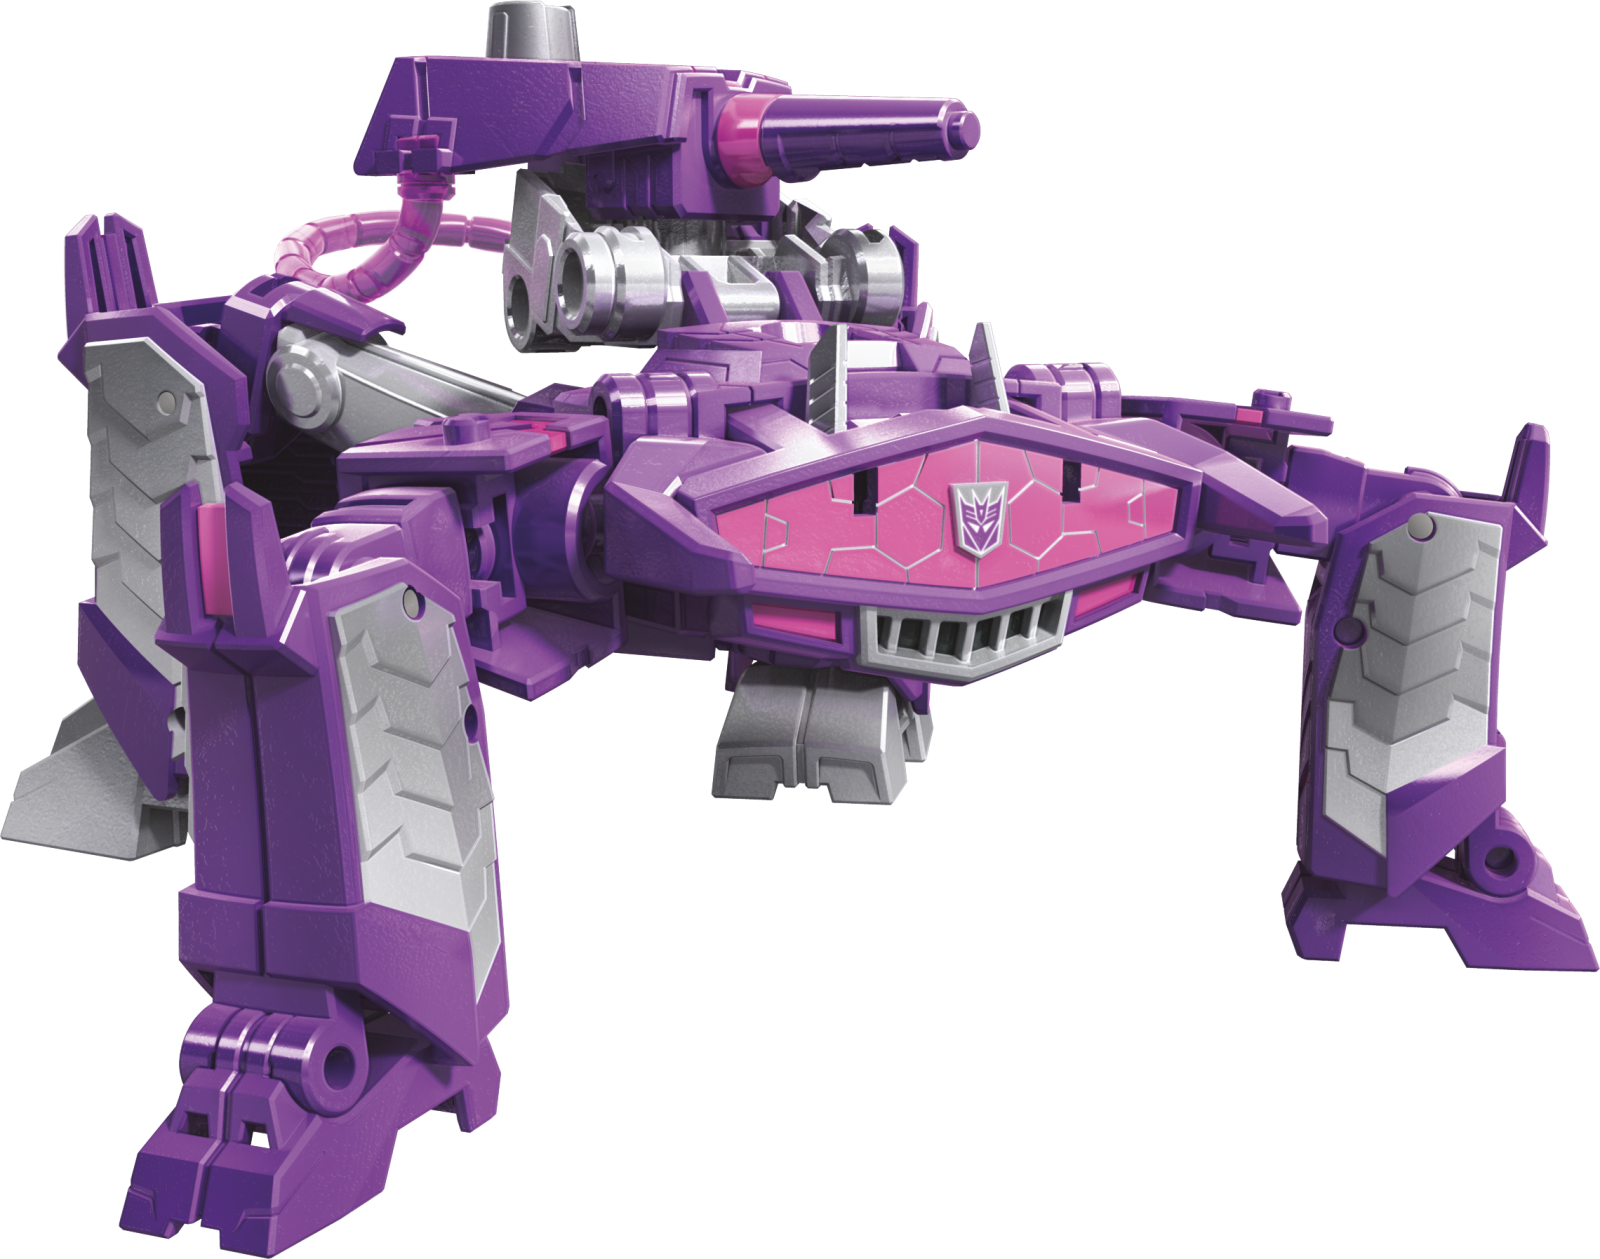 Transformers Cyberverse Shockwave. Transformers Cyberverse Deluxe. Transformers Cyberverse Шоквейв. Transformers Cyberverse Deluxe class. Transform each